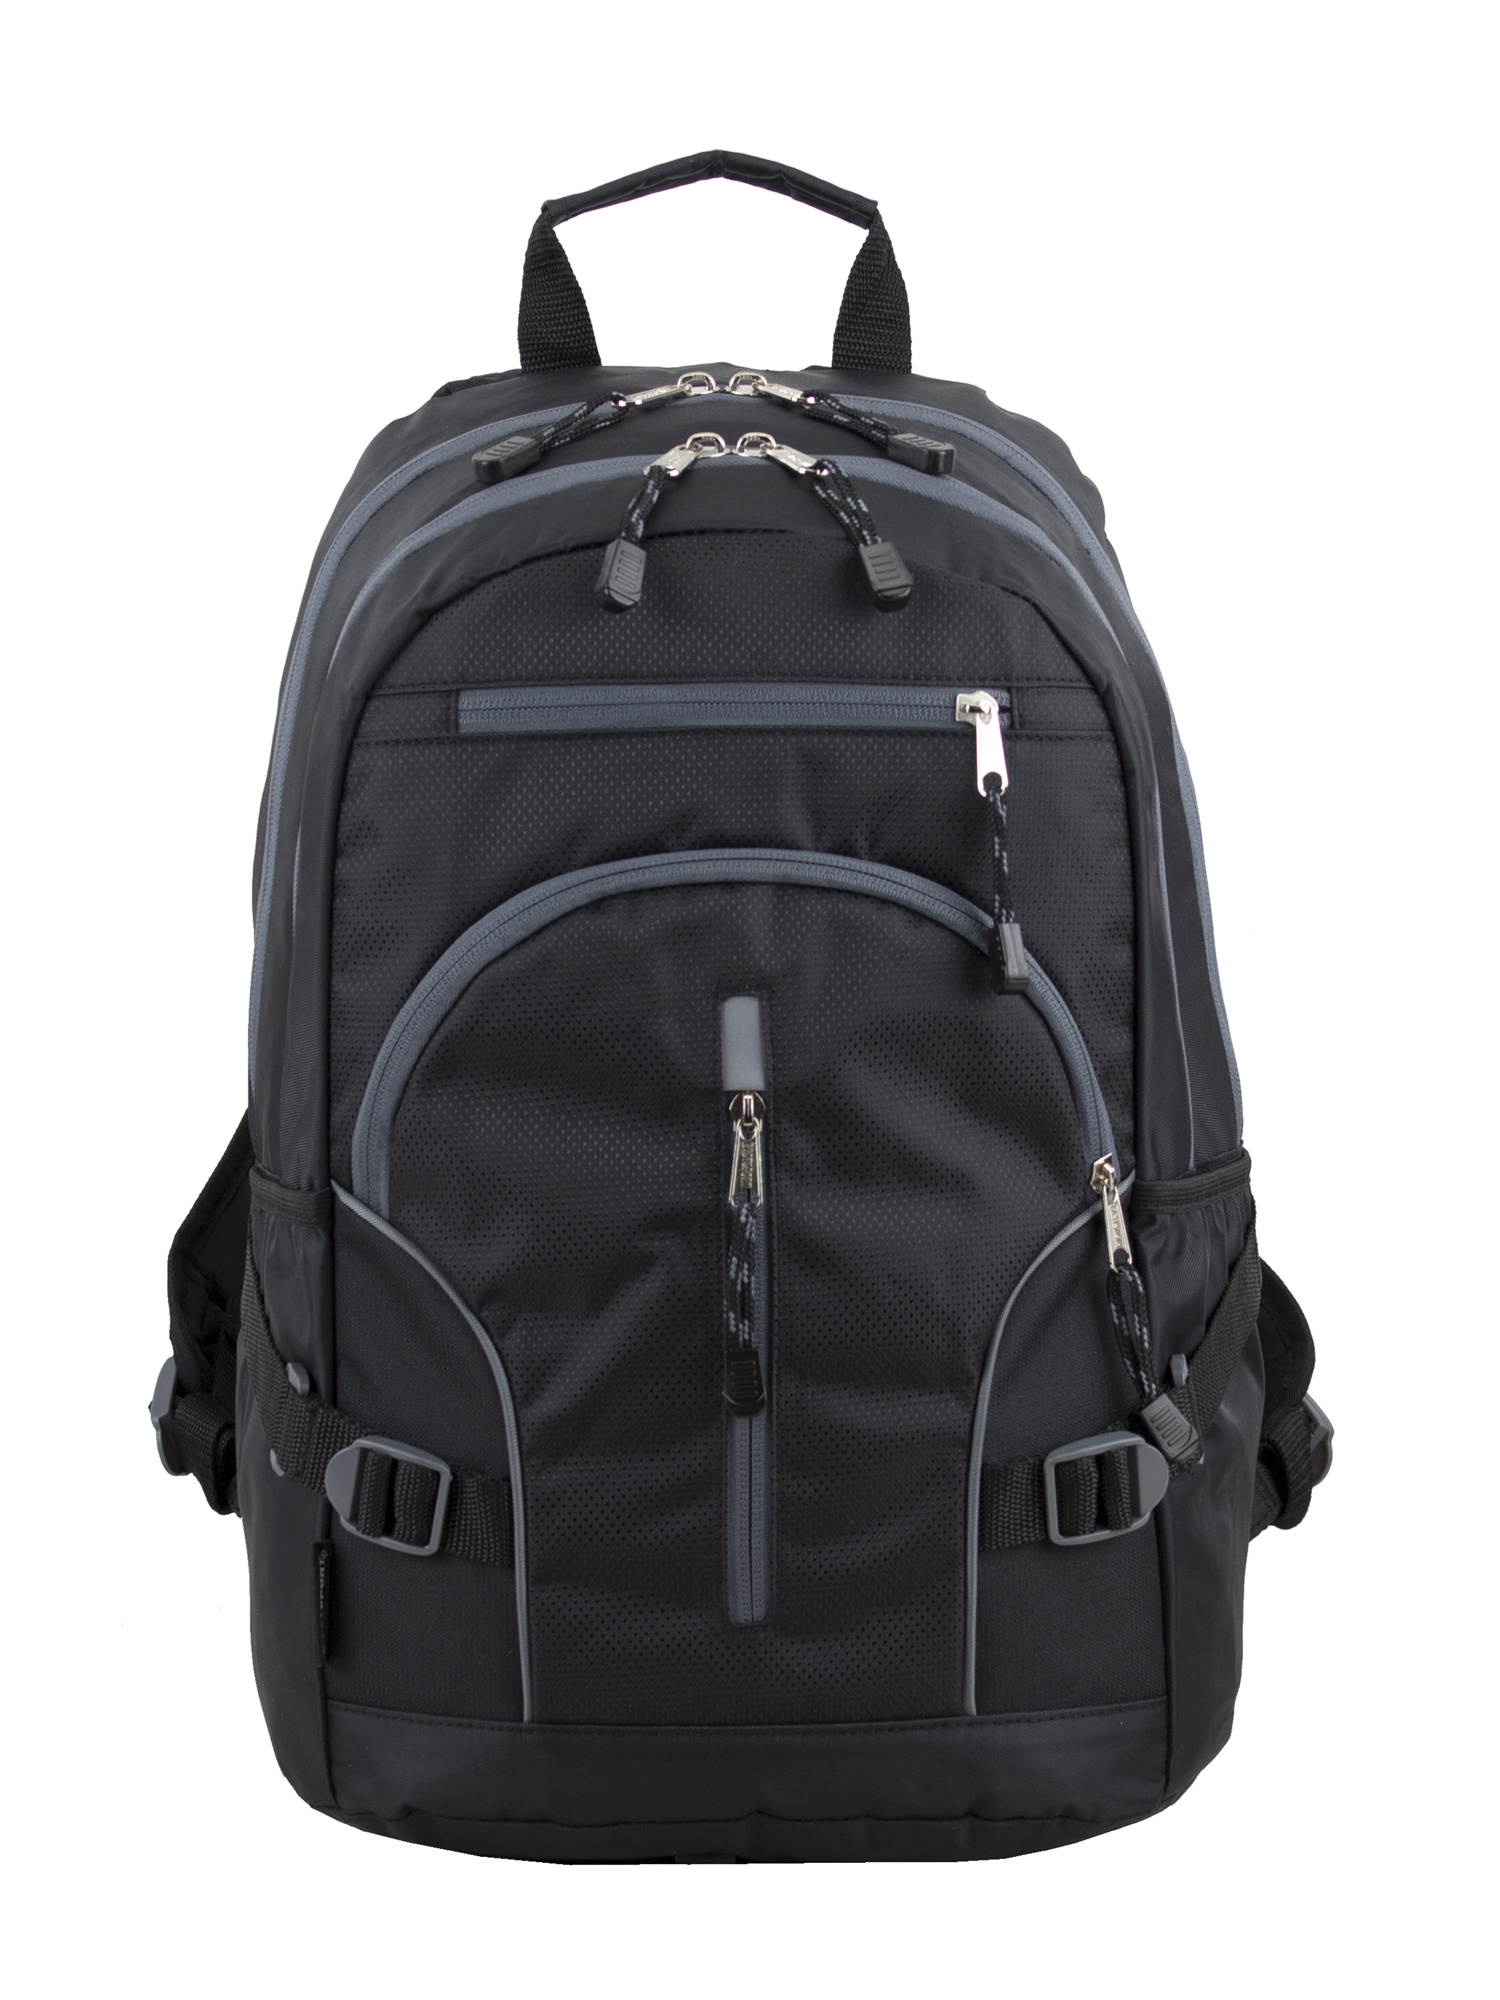 Eastsport Multi-Purpose Dynamic School Black Backpack - image 4 of 6